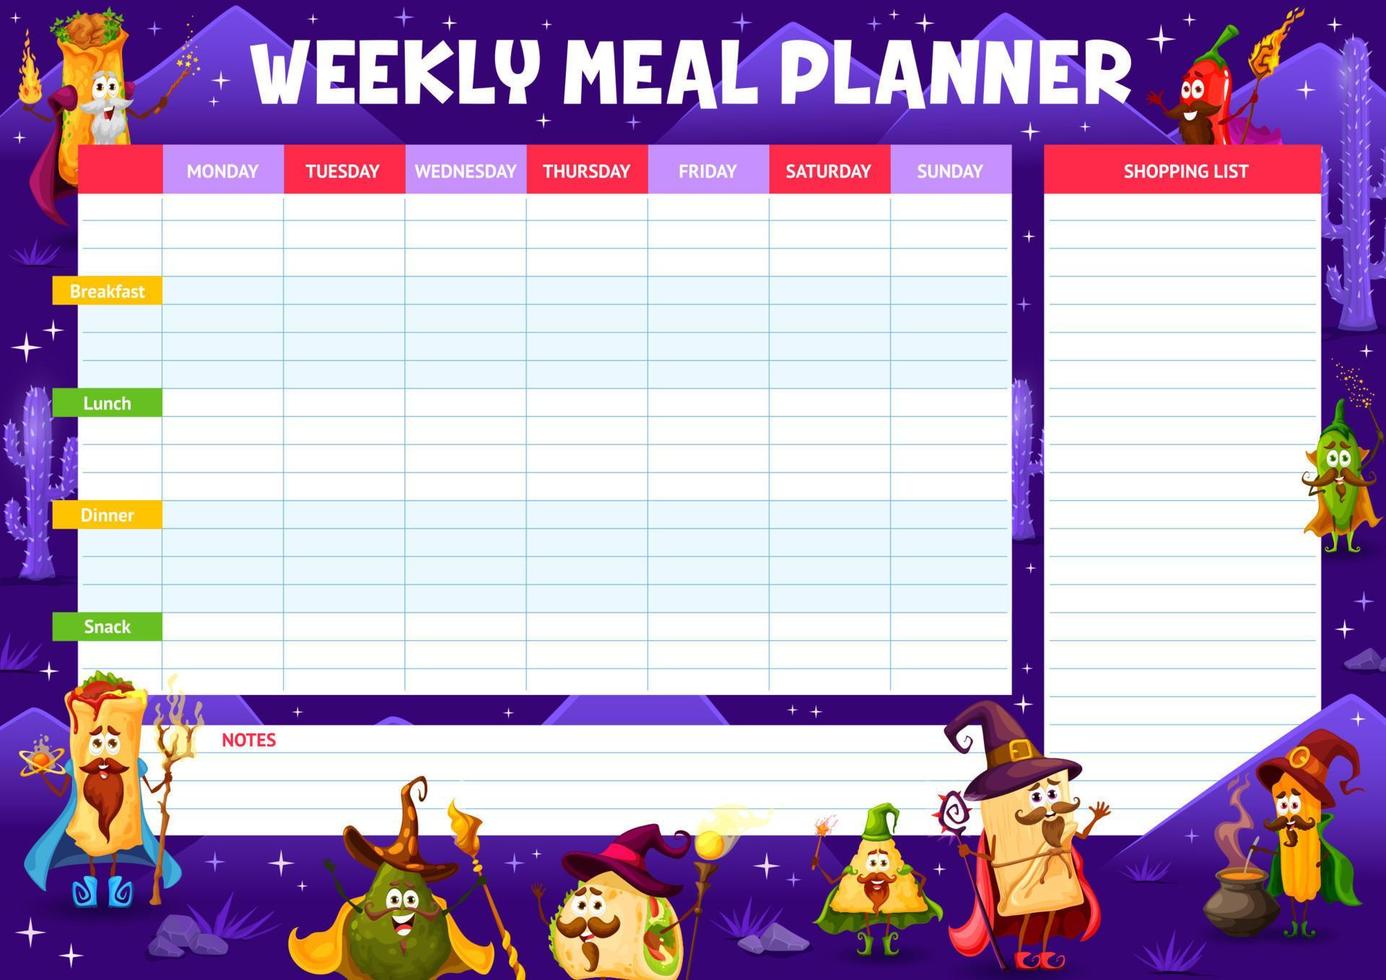 Weekly meal planner schedule, Mexican food wizards vector